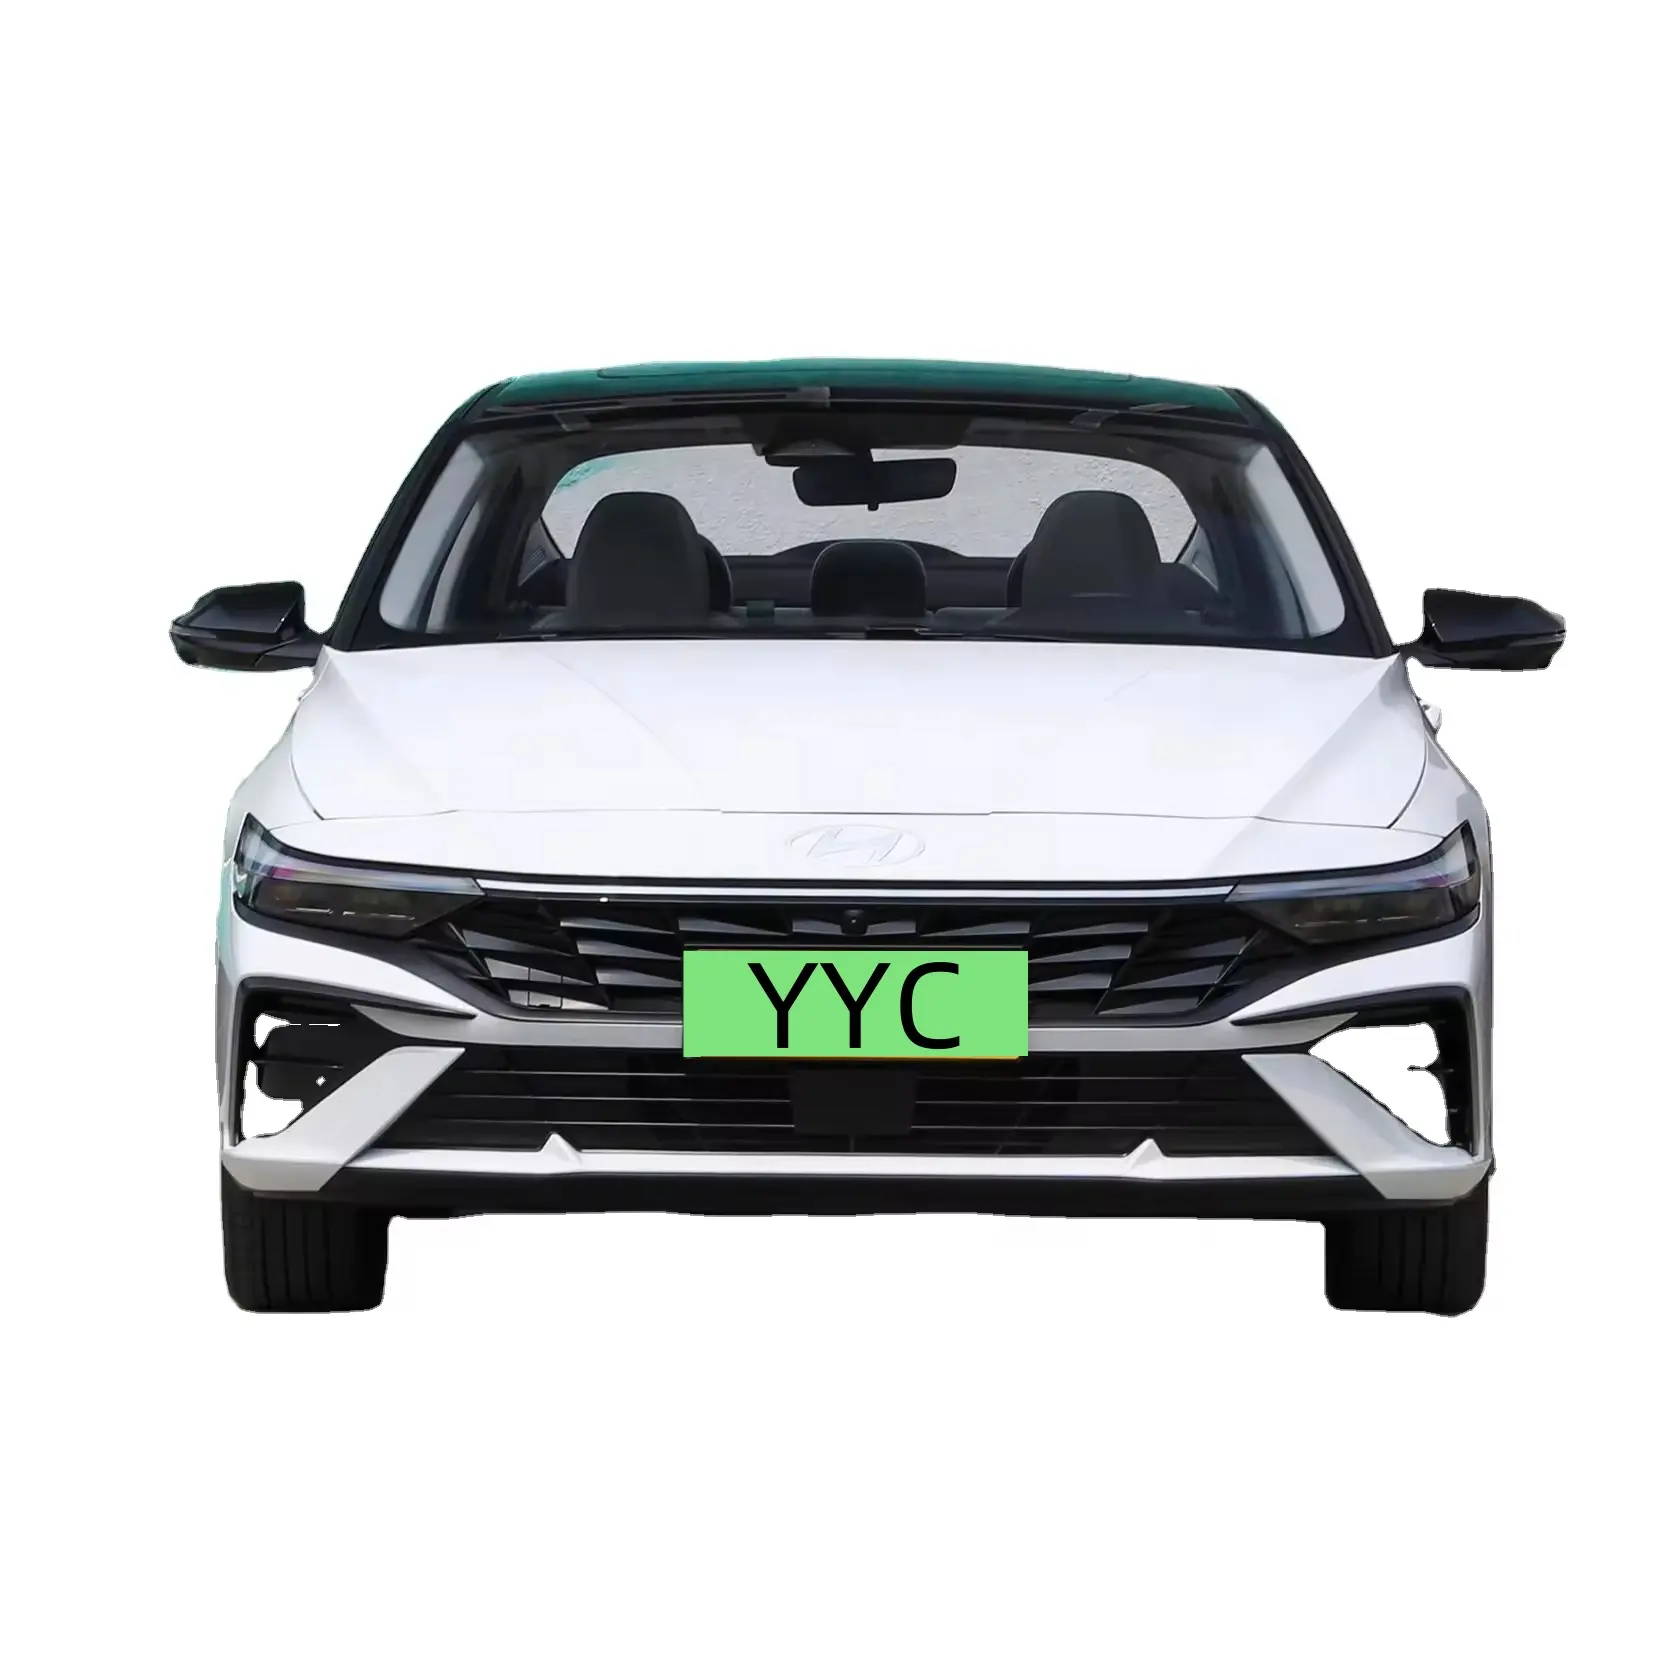 YYC במלאי סין מחיר זול רכבים במצב טוב יונדאי חדש ומשומש יונדאי אלנטרה 1.5 ליטר מכוניות חדשות